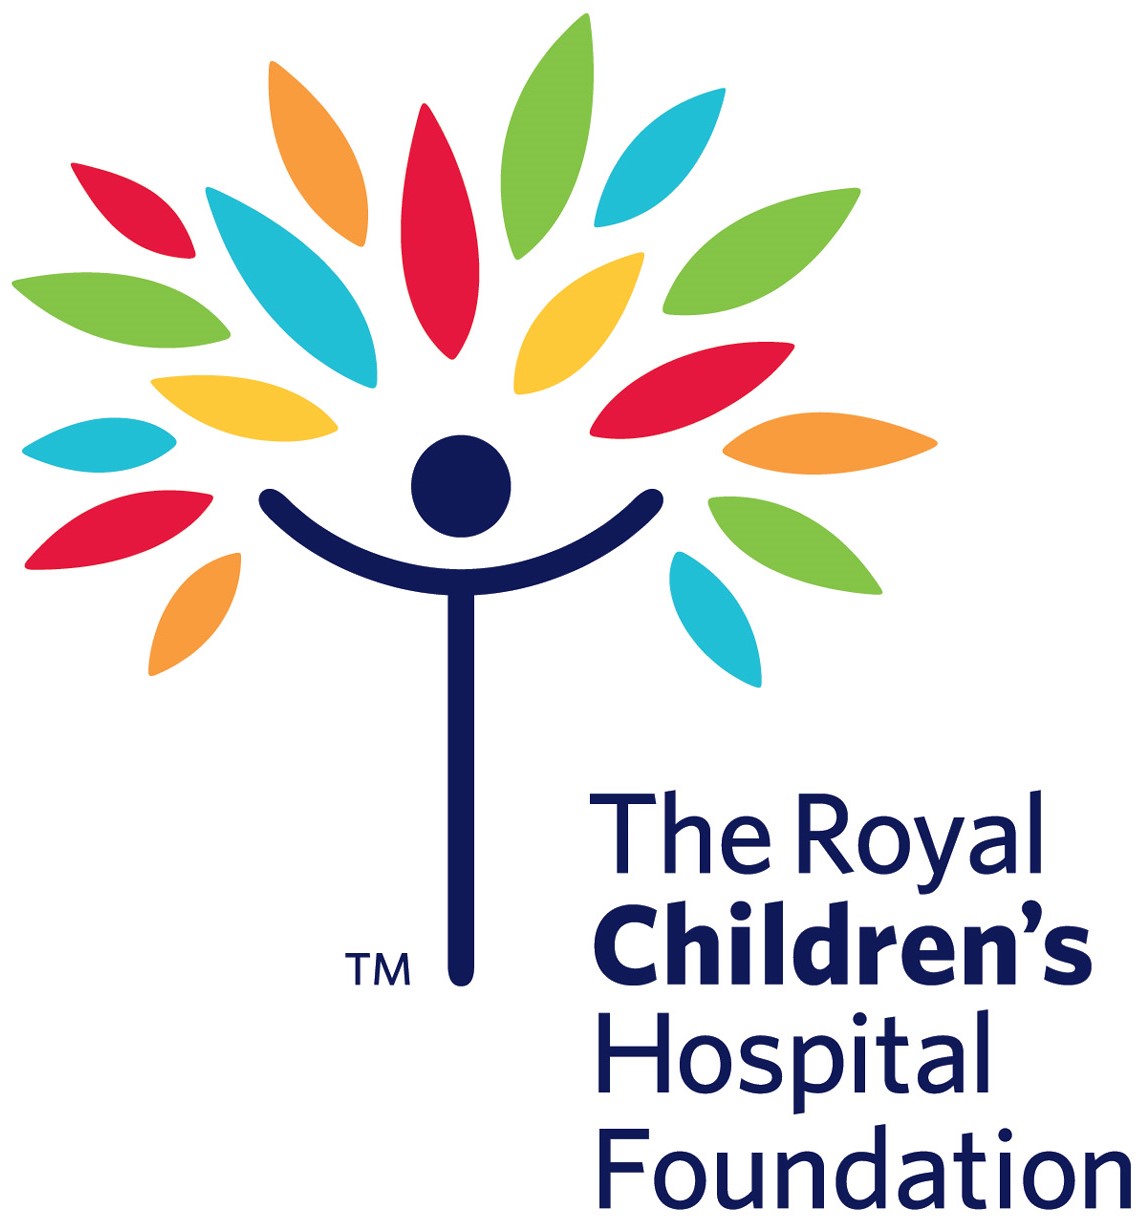 The Royal Children’s Hospital Foundation